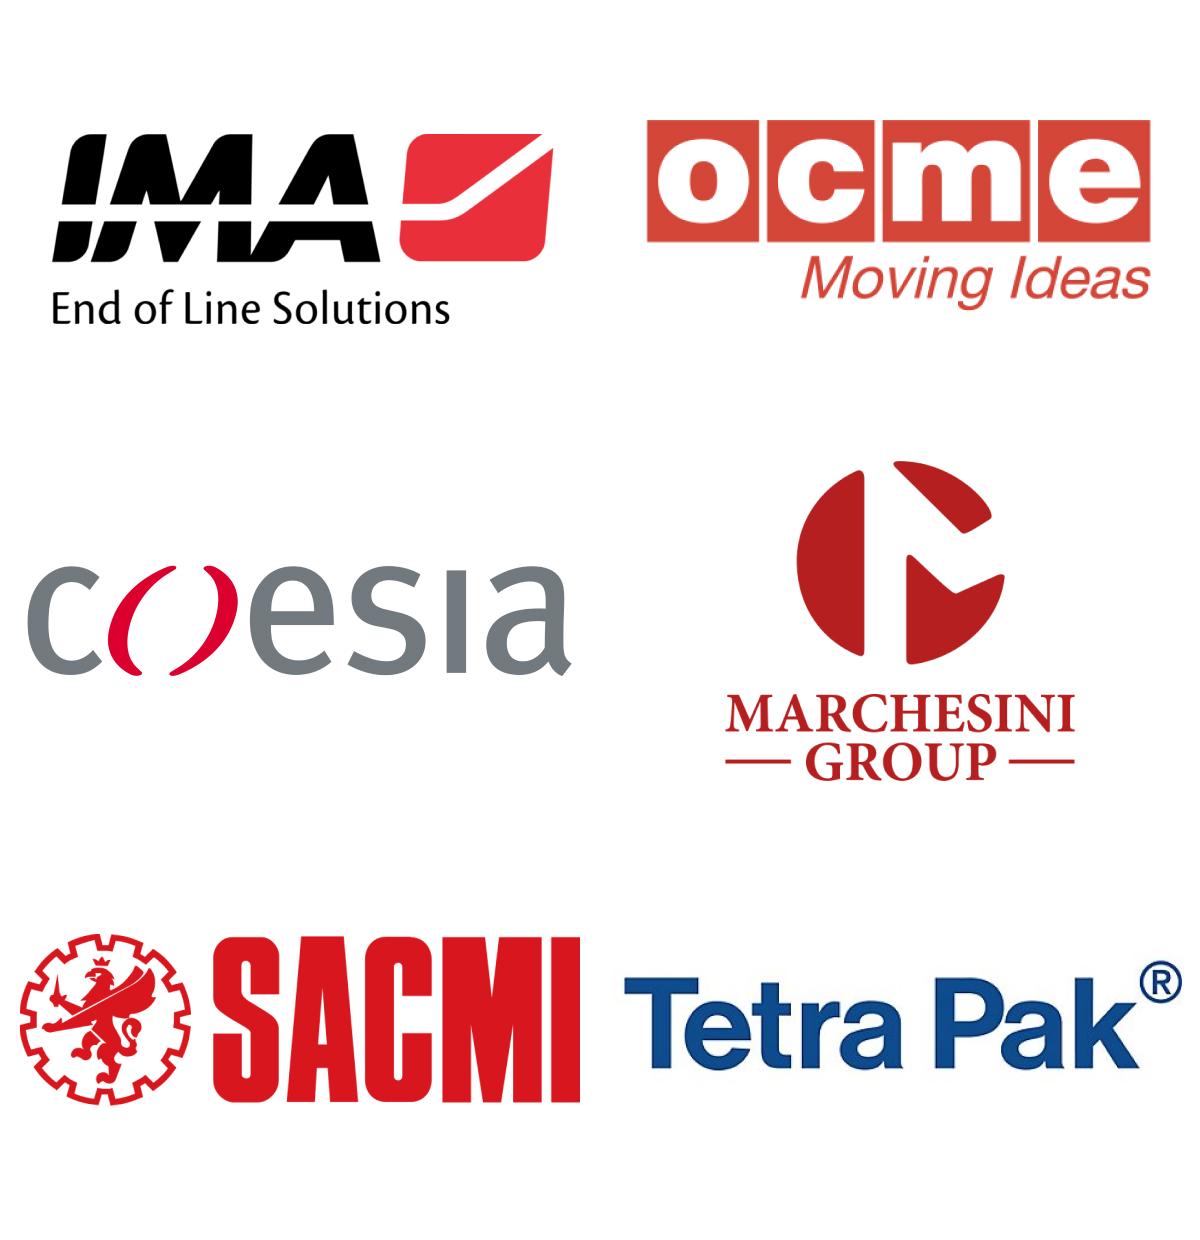 Immagini loghi top brand colonna 2: IMA End of Line Solution, OCME, Coesia, Marchesini group, SACMI, TetraPak.